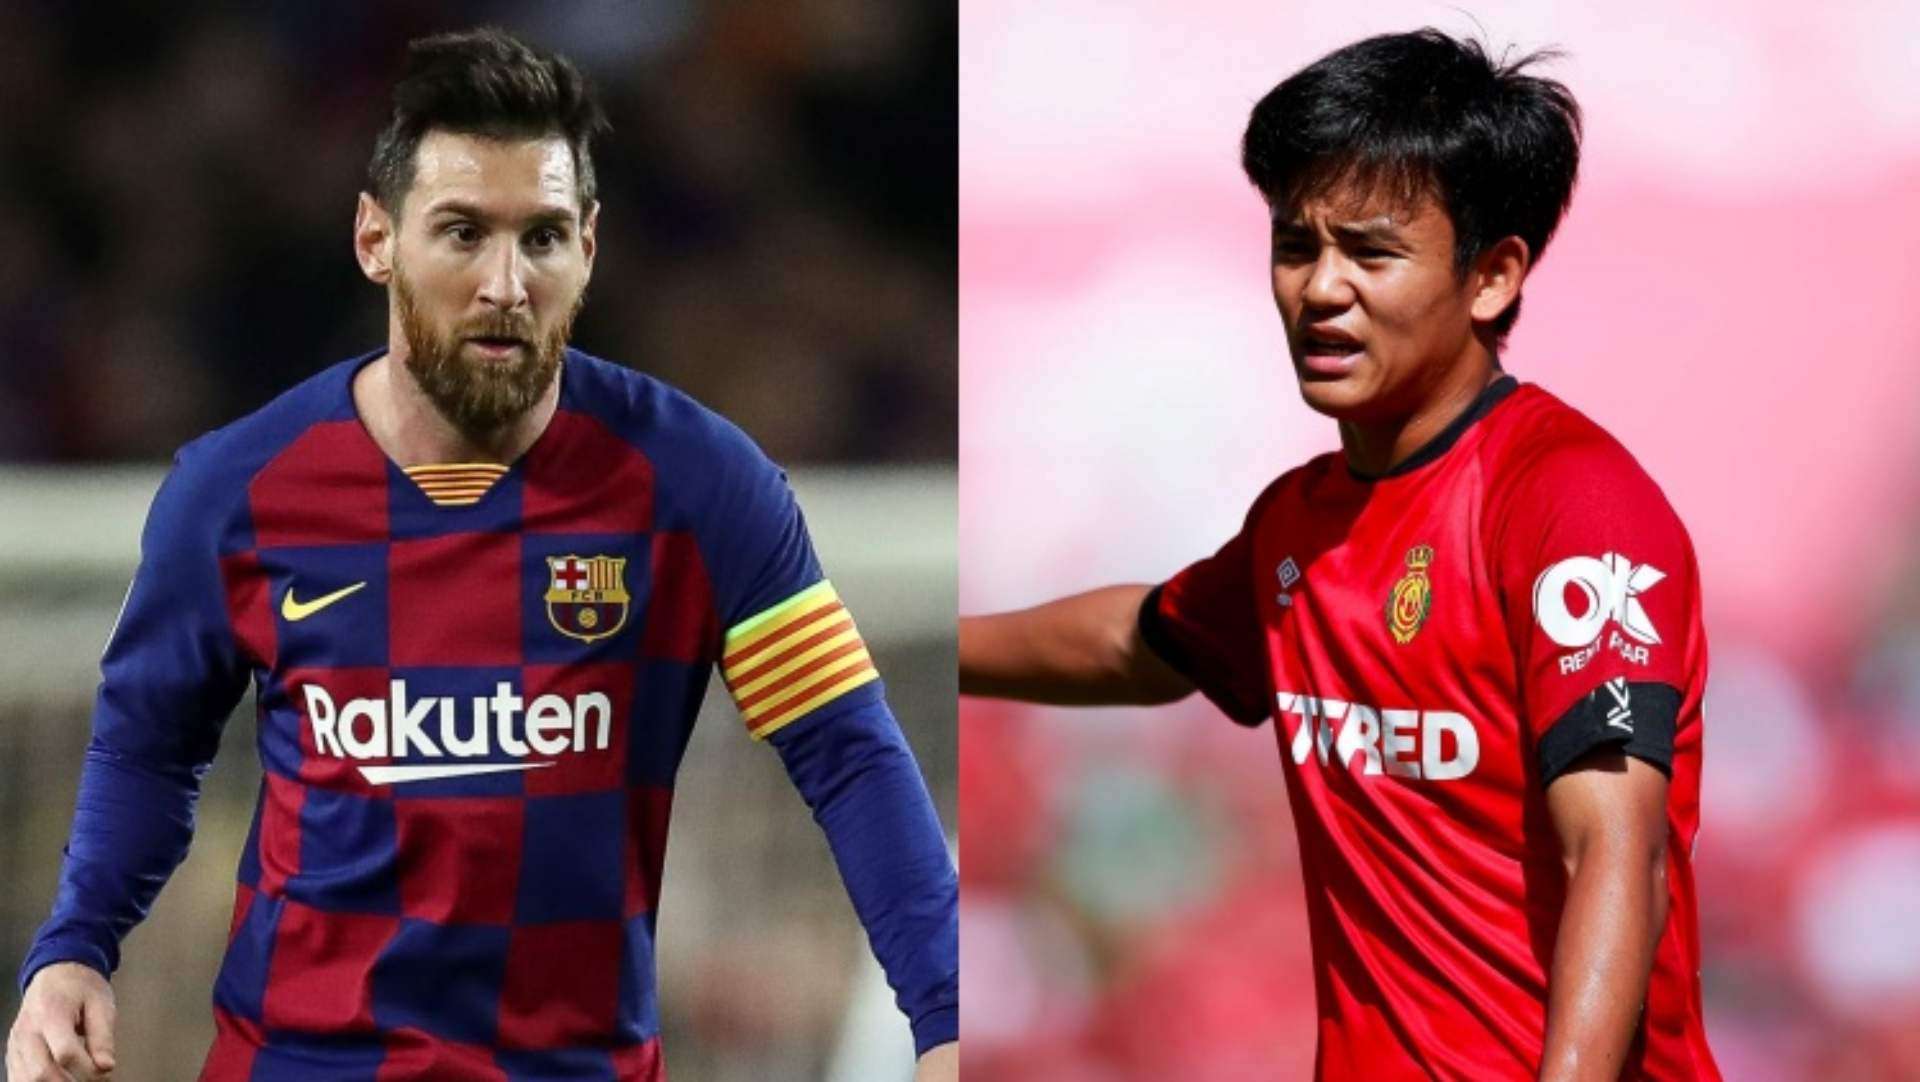 Lionel messi Barcelona Takefusa Kubo Mallorca 2019-20